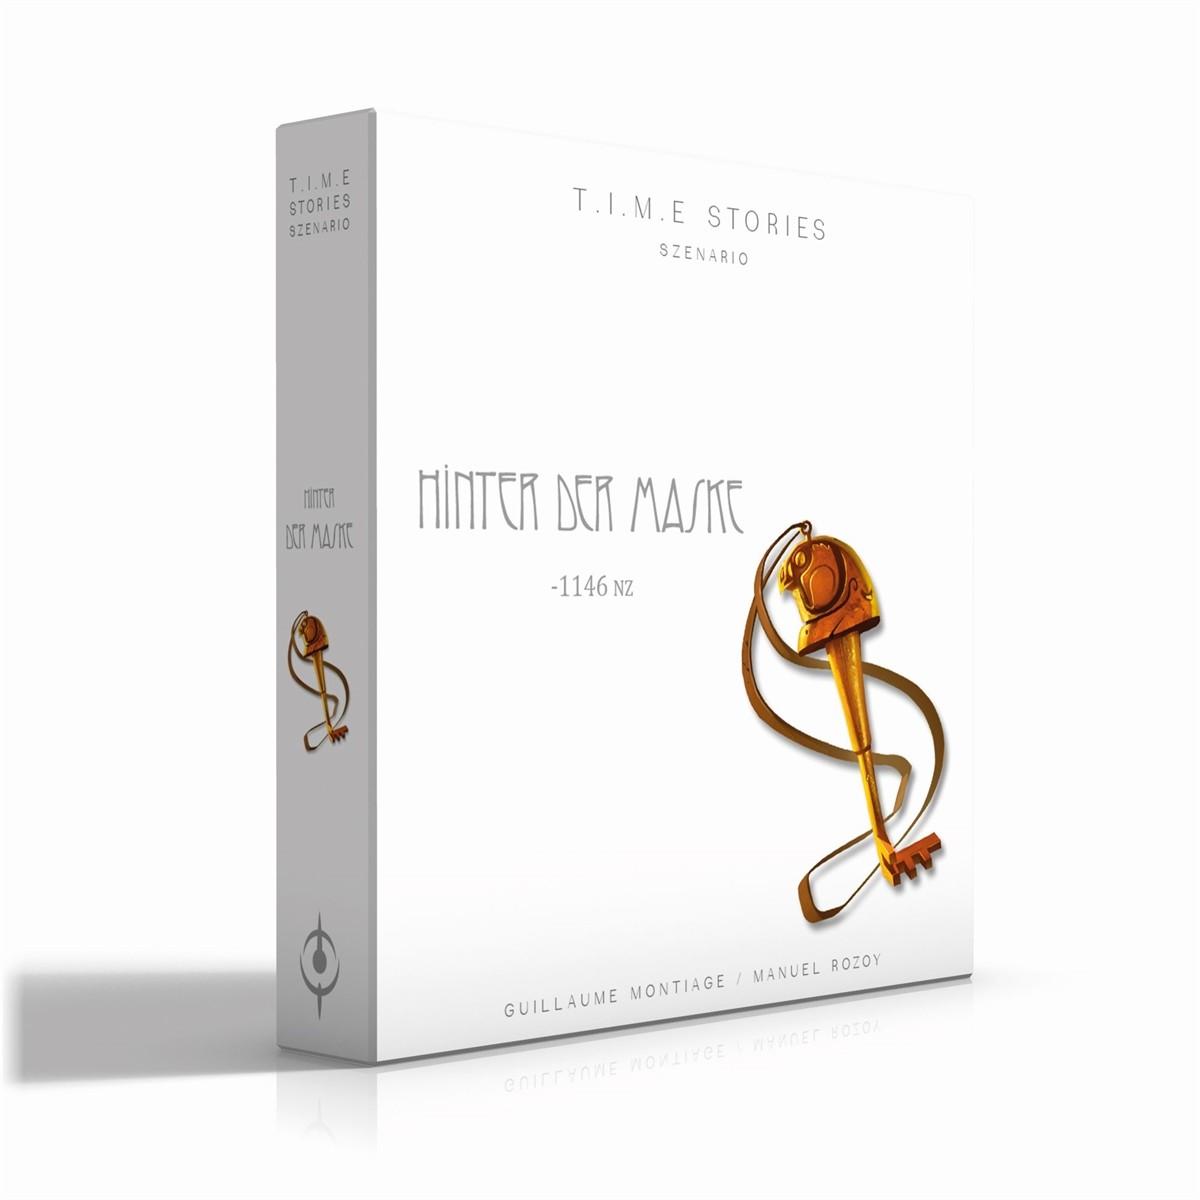 T.I.M.E Stories (Time Stories) - Szenario: Hinter der Maske